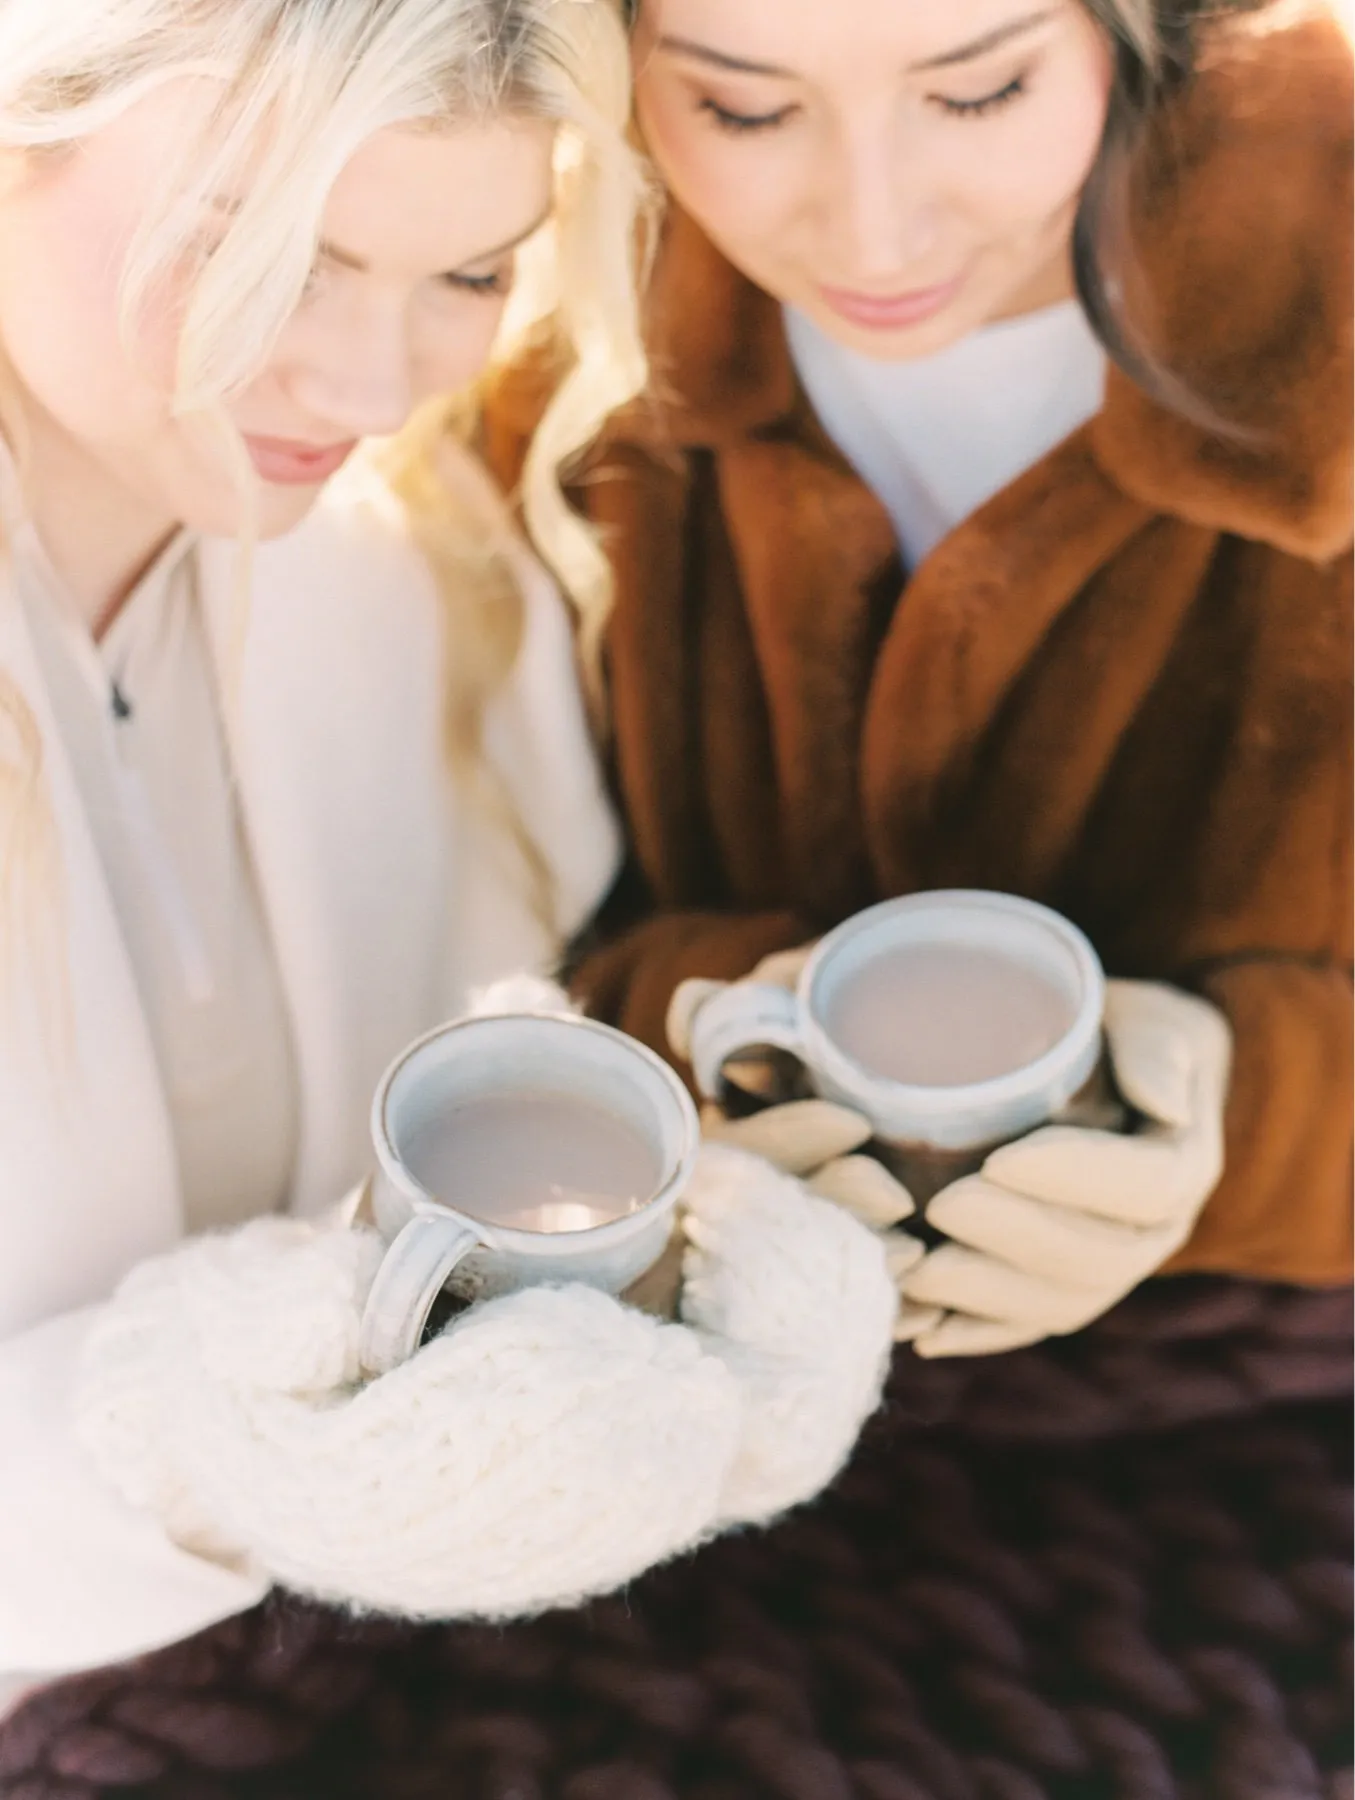 Two women holding mugs